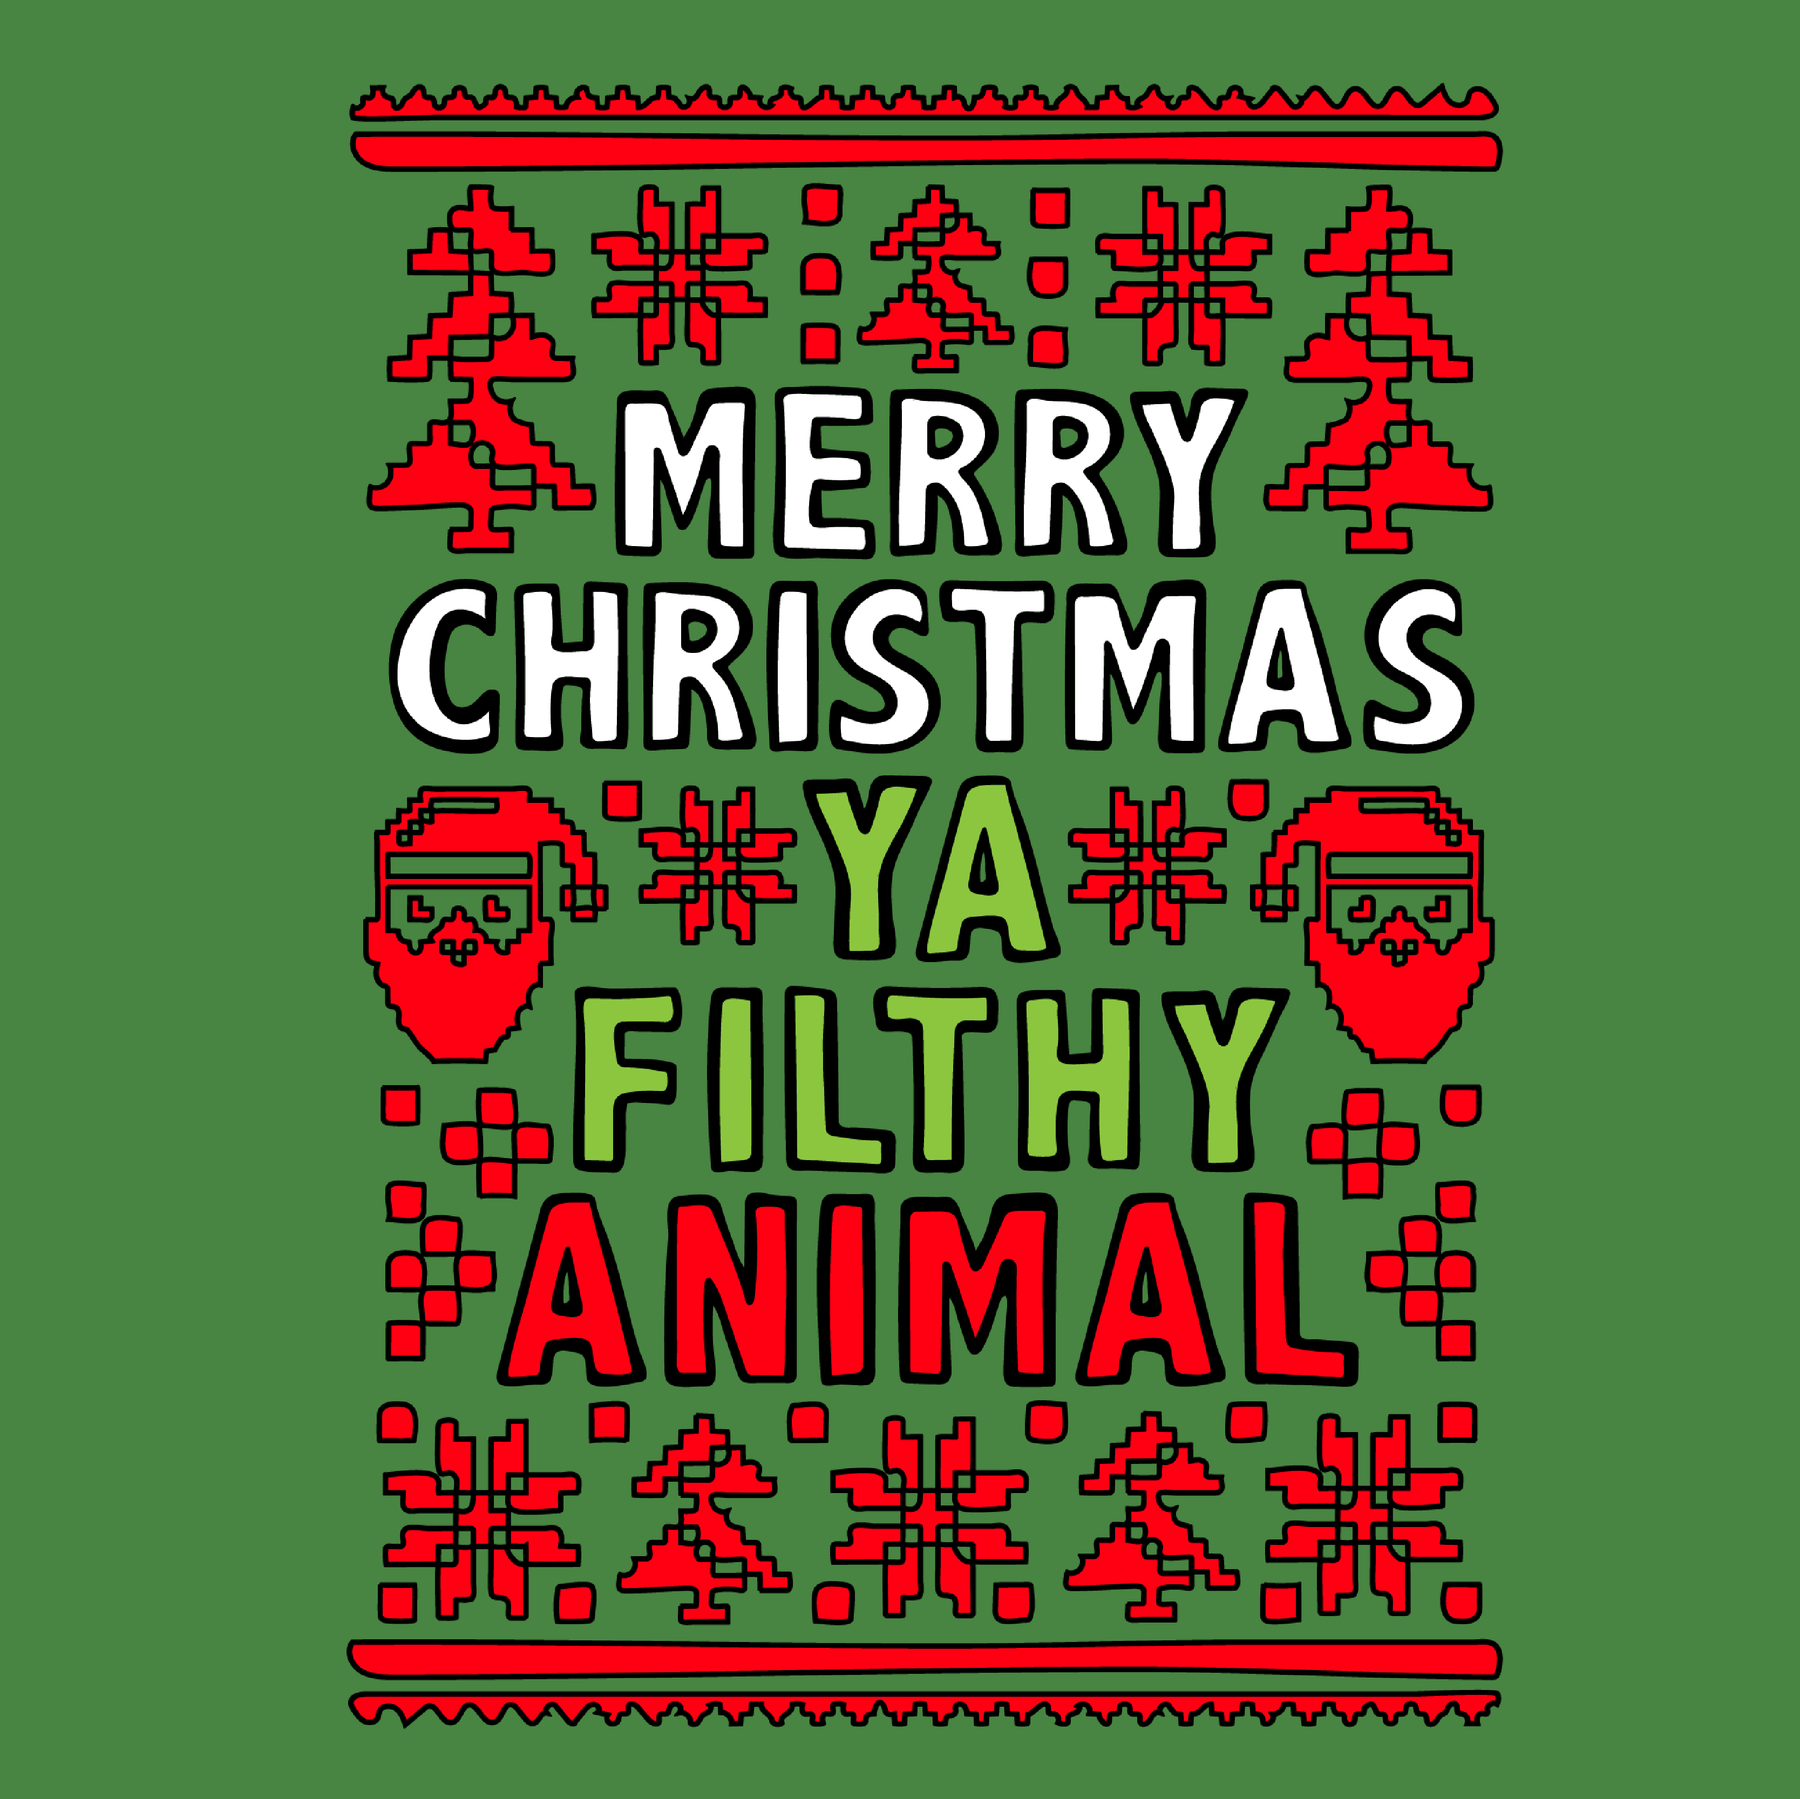 Filthy Animal Christmas 🎅 – Women's T Shirt